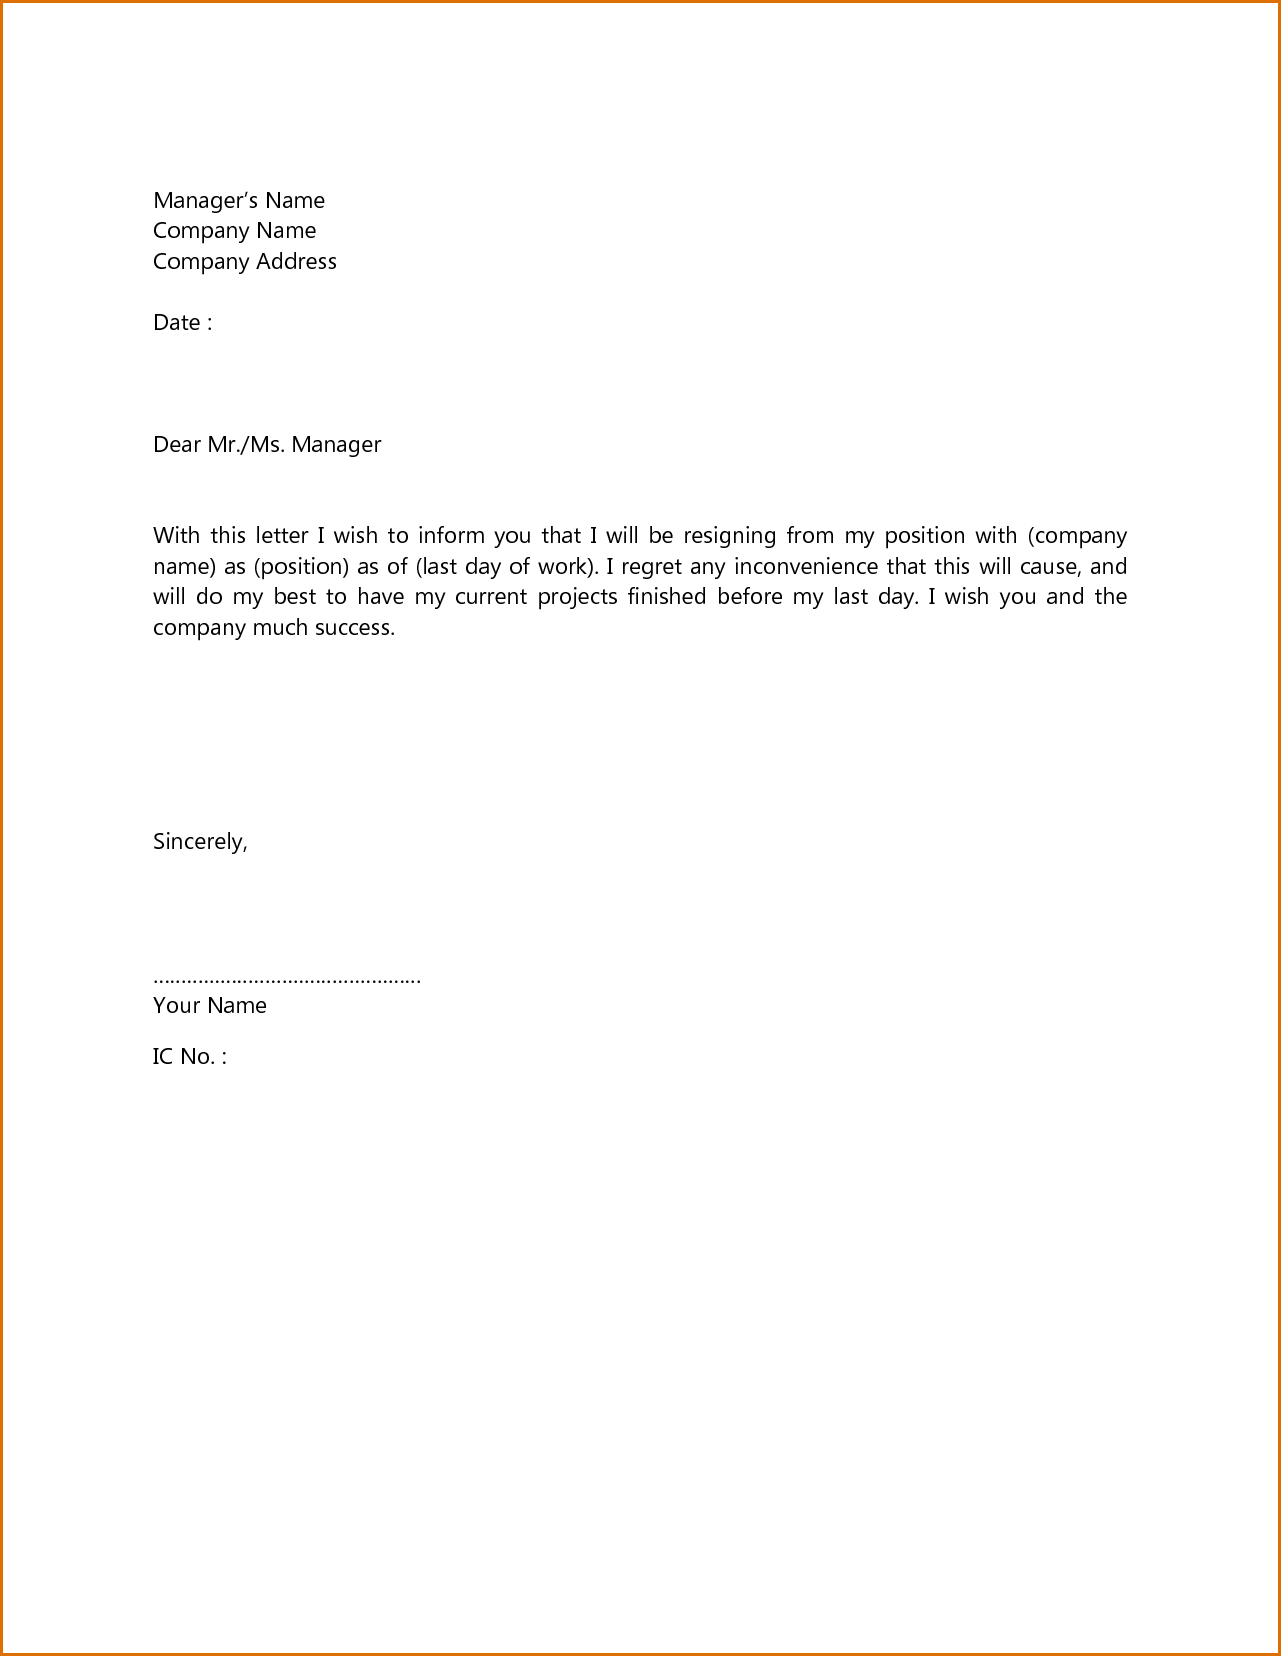 Termination Letter Sample Singapore Formal Resignation Cover Samples inside Template For Resignation Letter Singapore